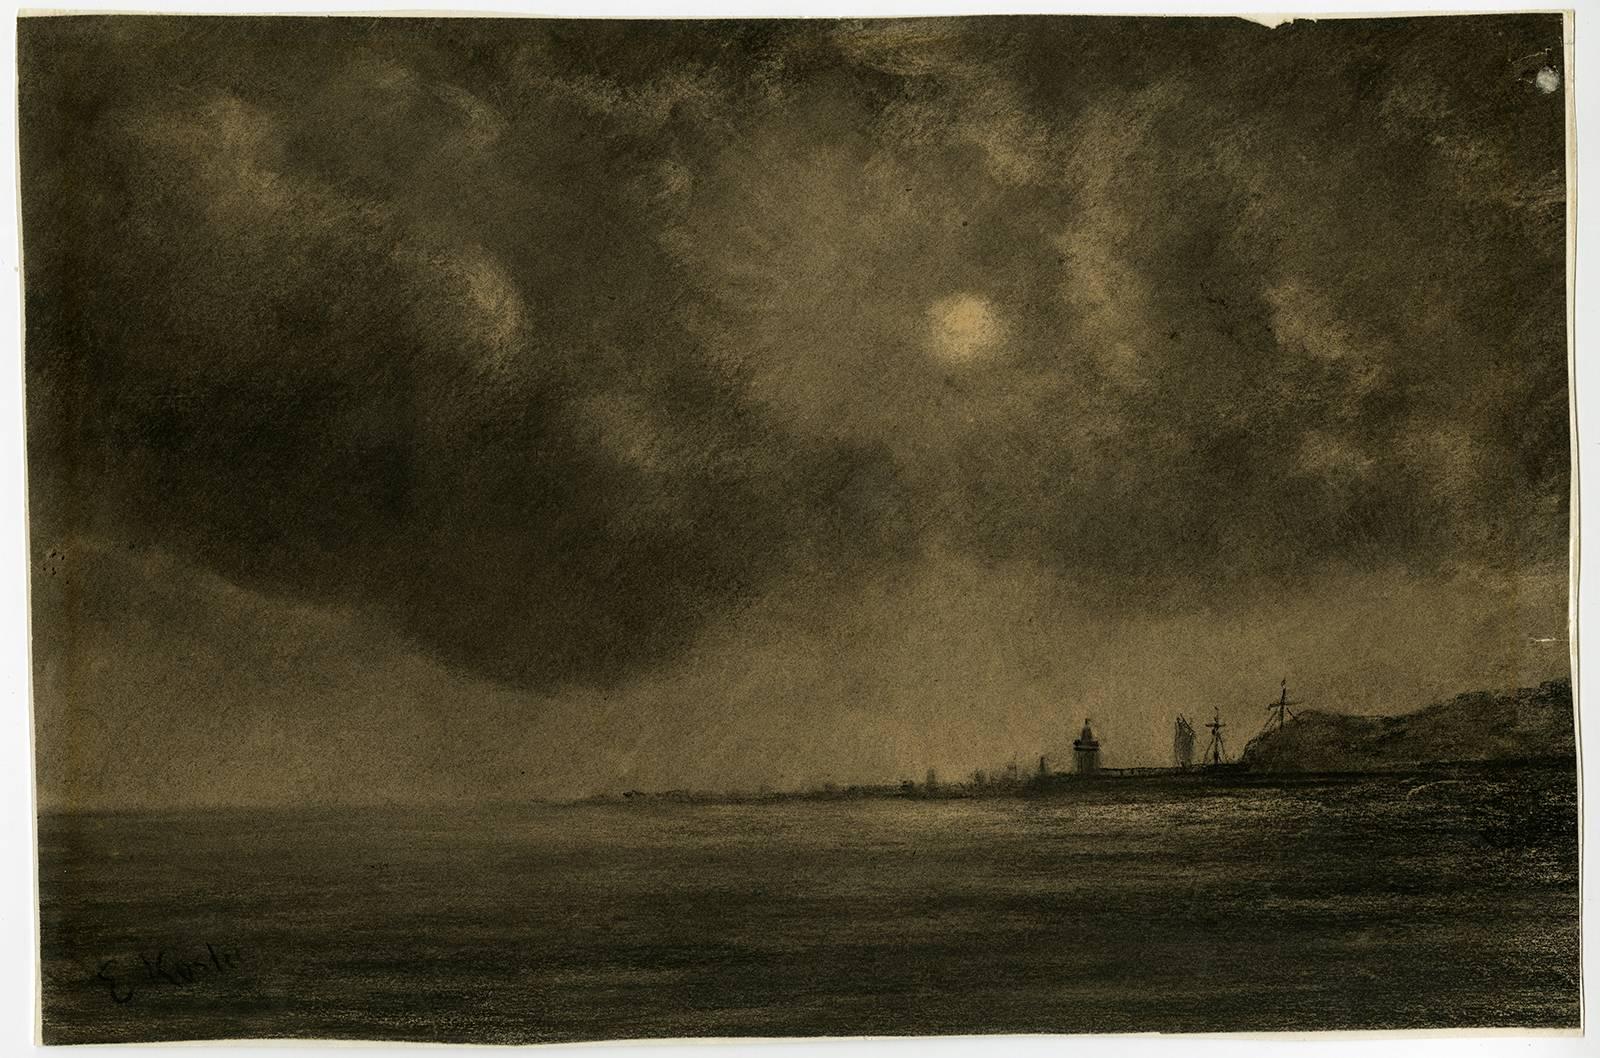 Everhardus Koster Landscape Art - Untitled - Atmospheric seascape night scene along the Dutch North Sea coast.